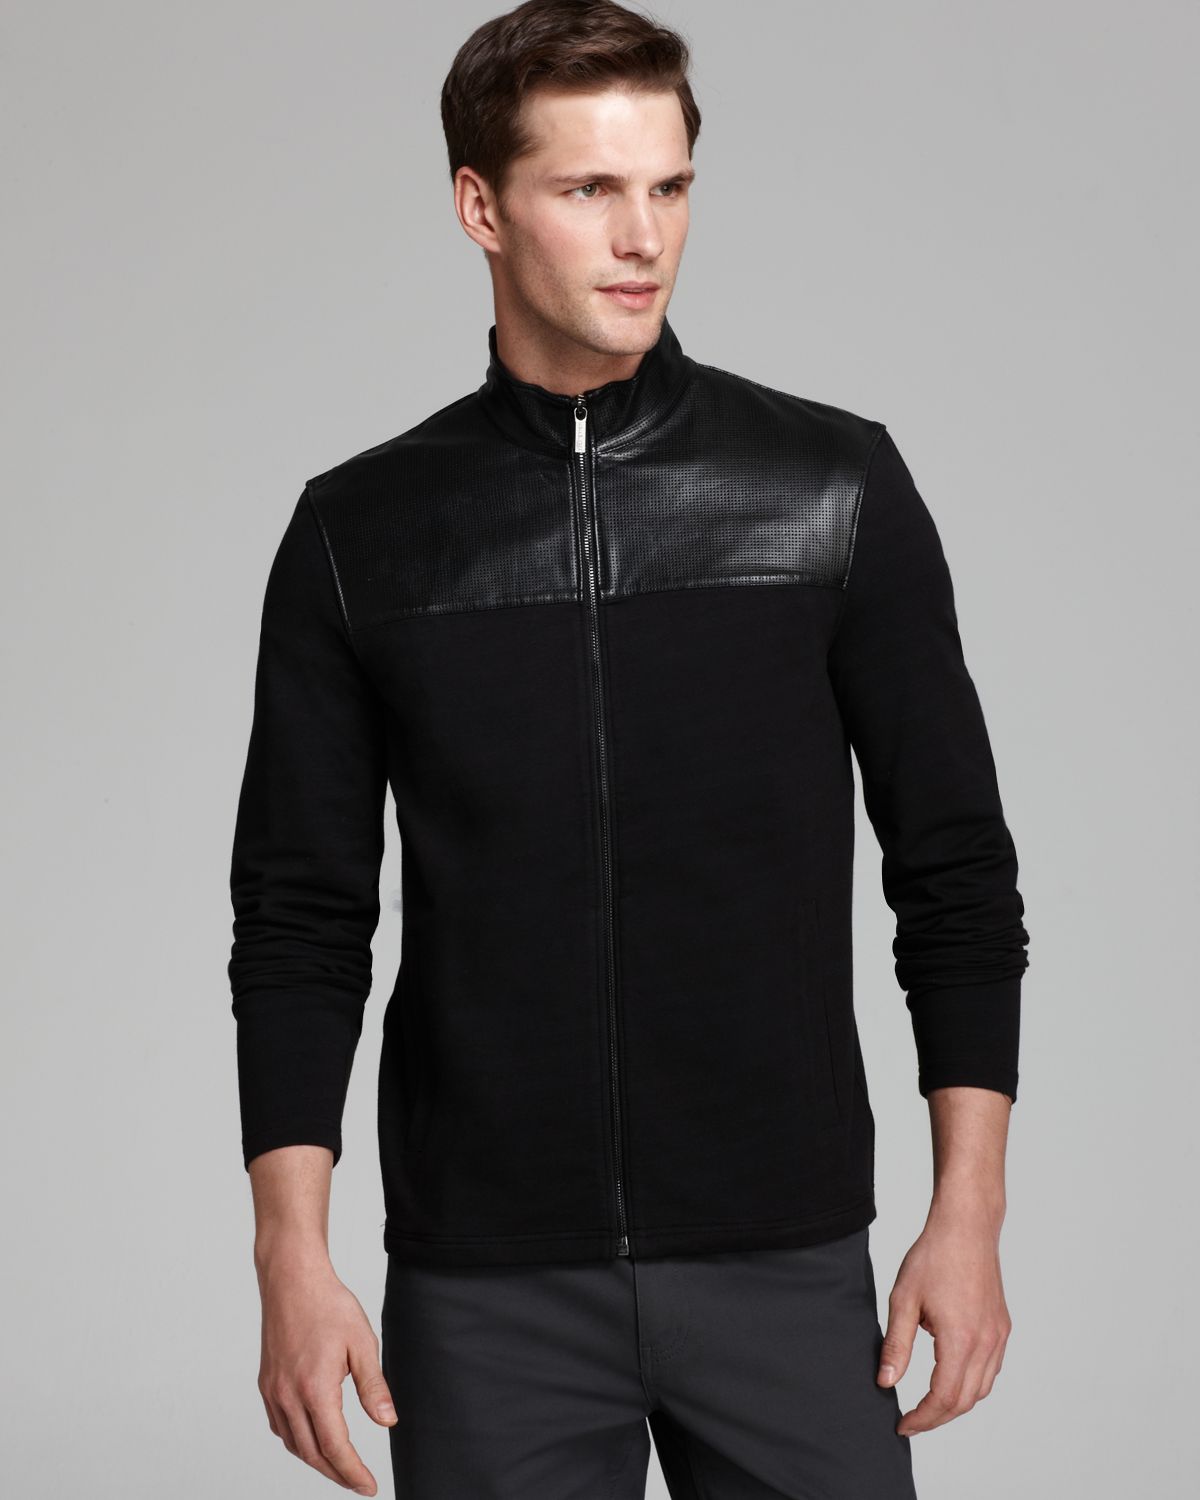 Michael kors Leather Yoke Cotton Jacket in Black for Men | Lyst